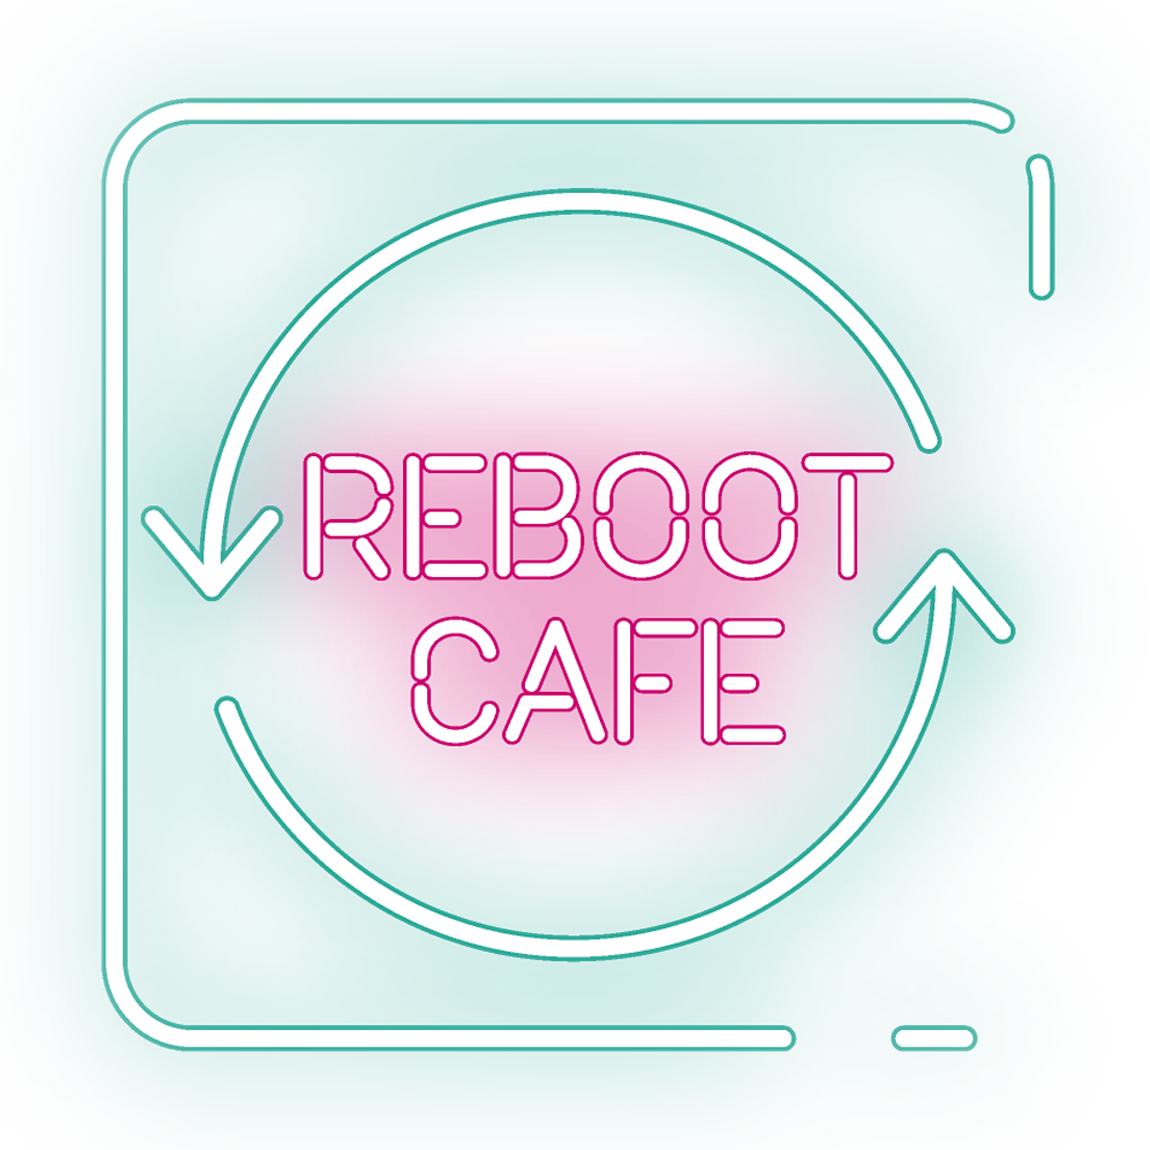 REBOOT CAFE